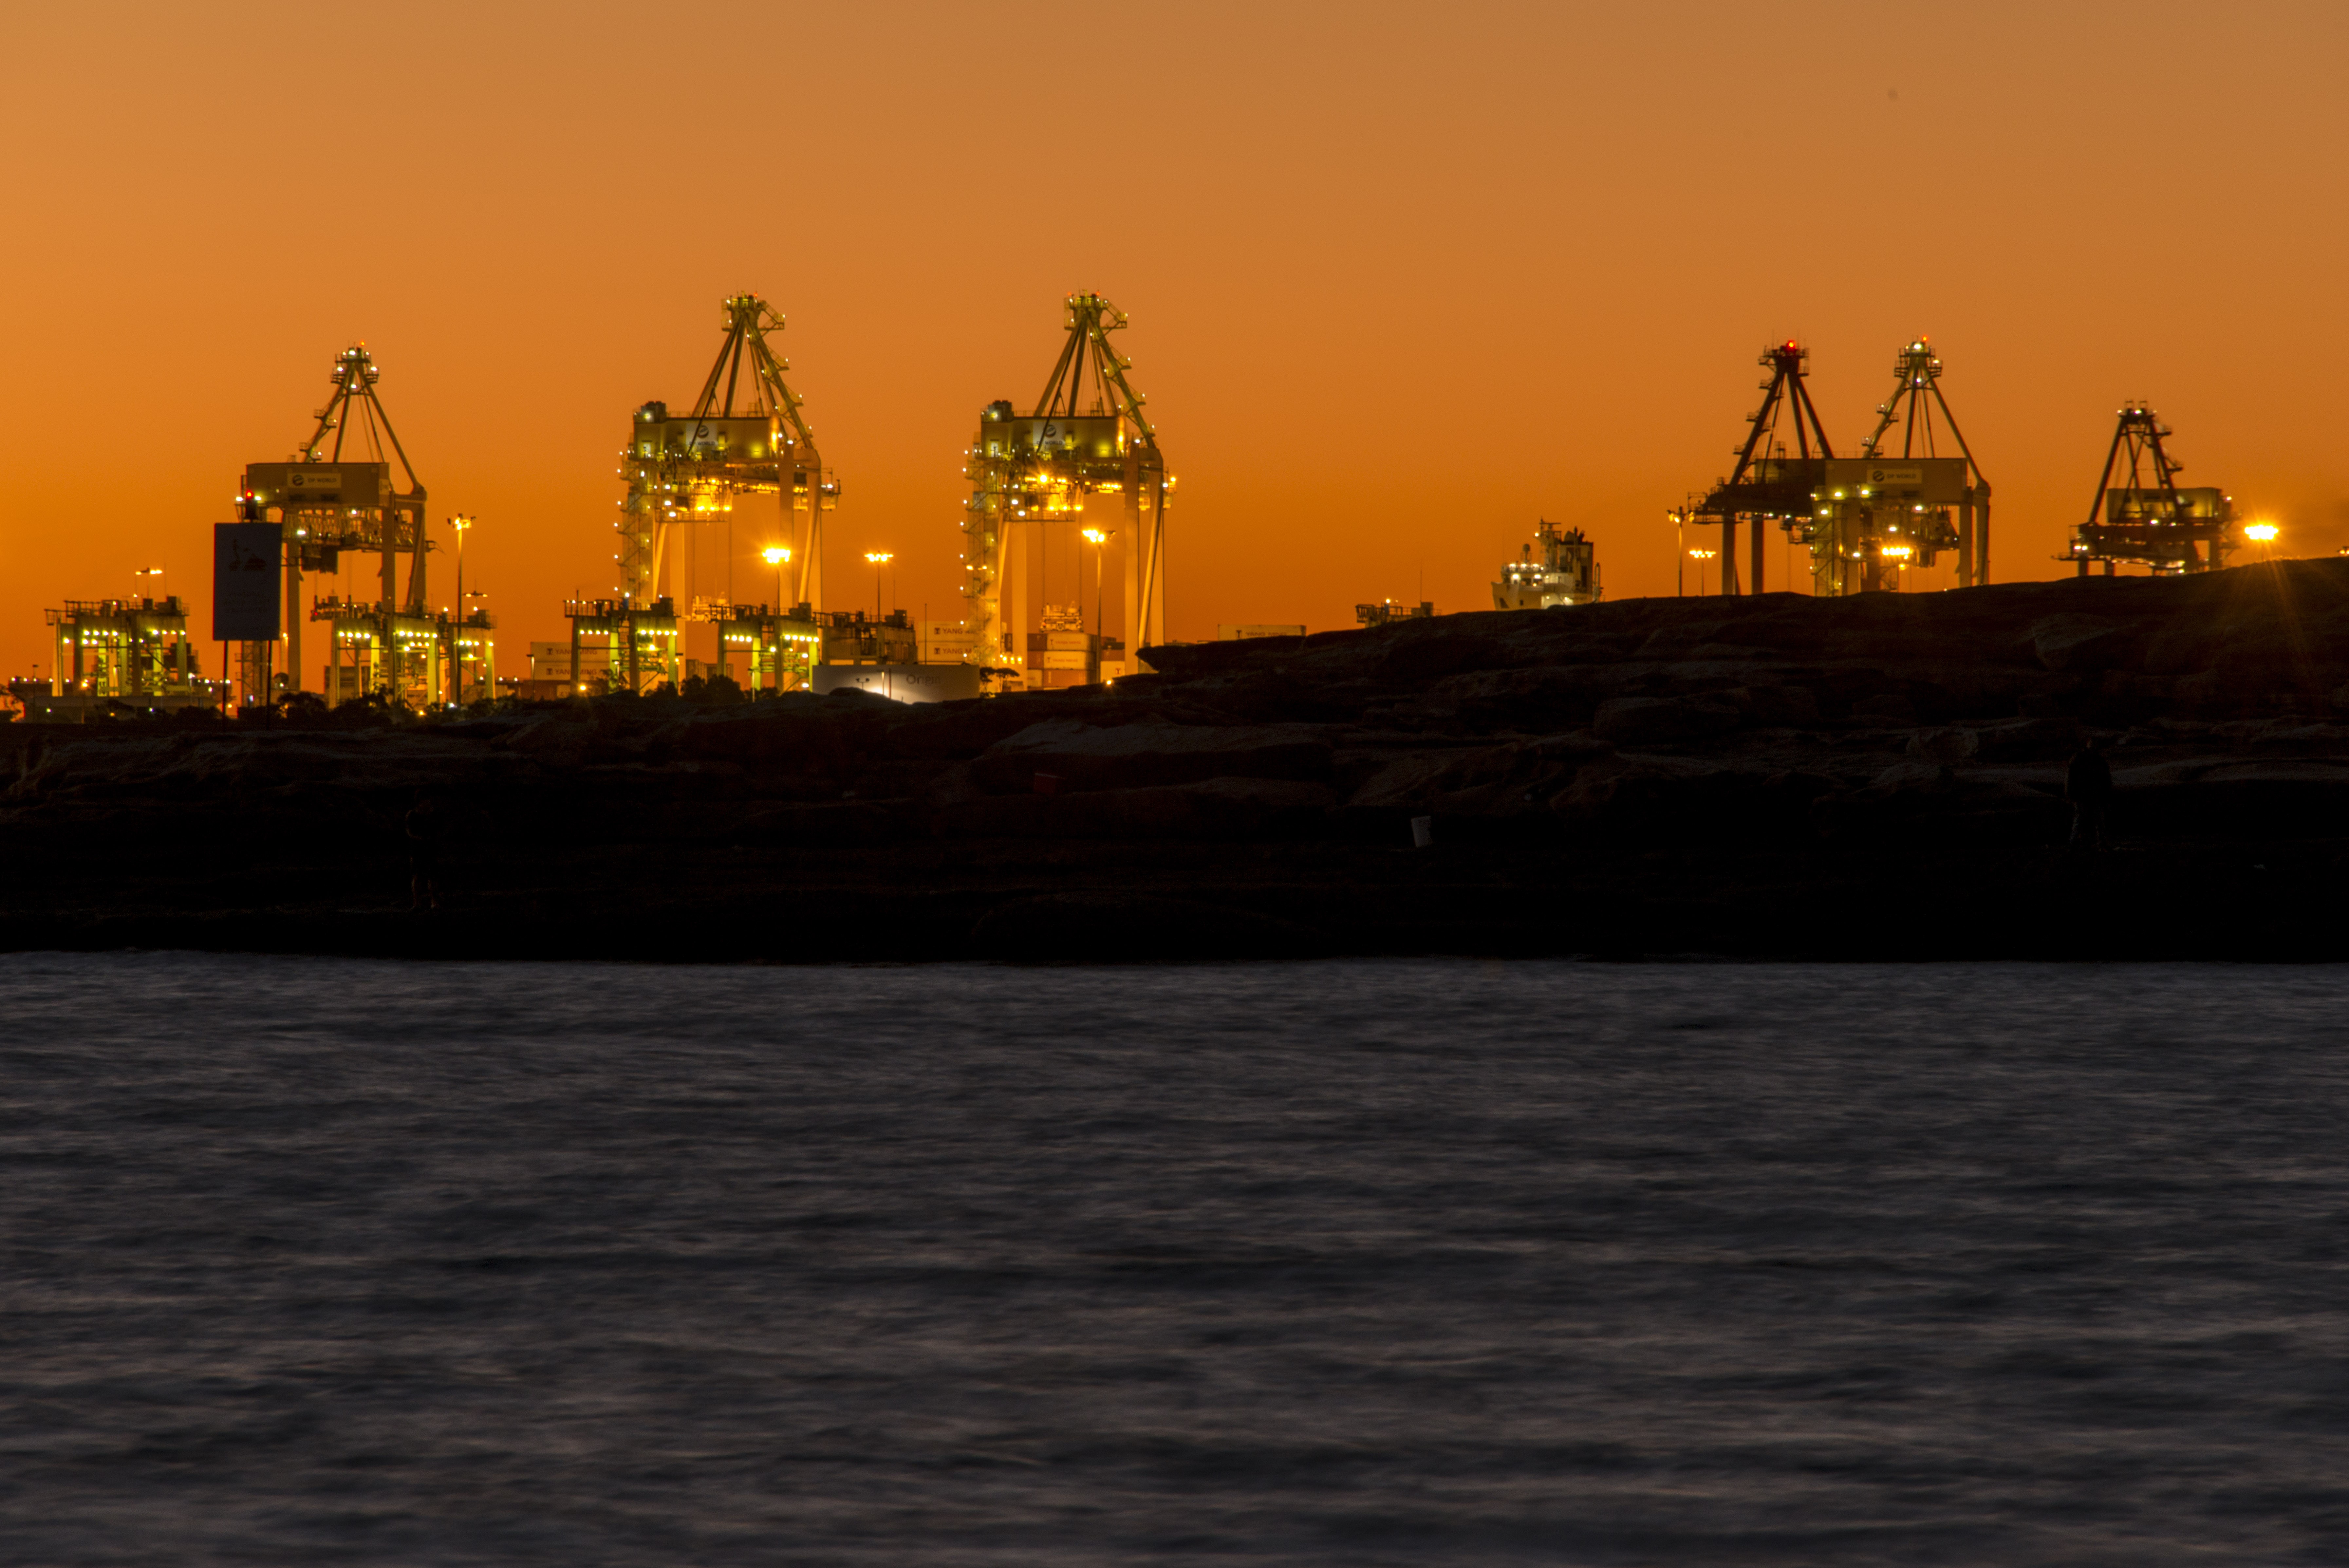 Ports Cranes Machine Dock Night Sea Containers 7173x4788